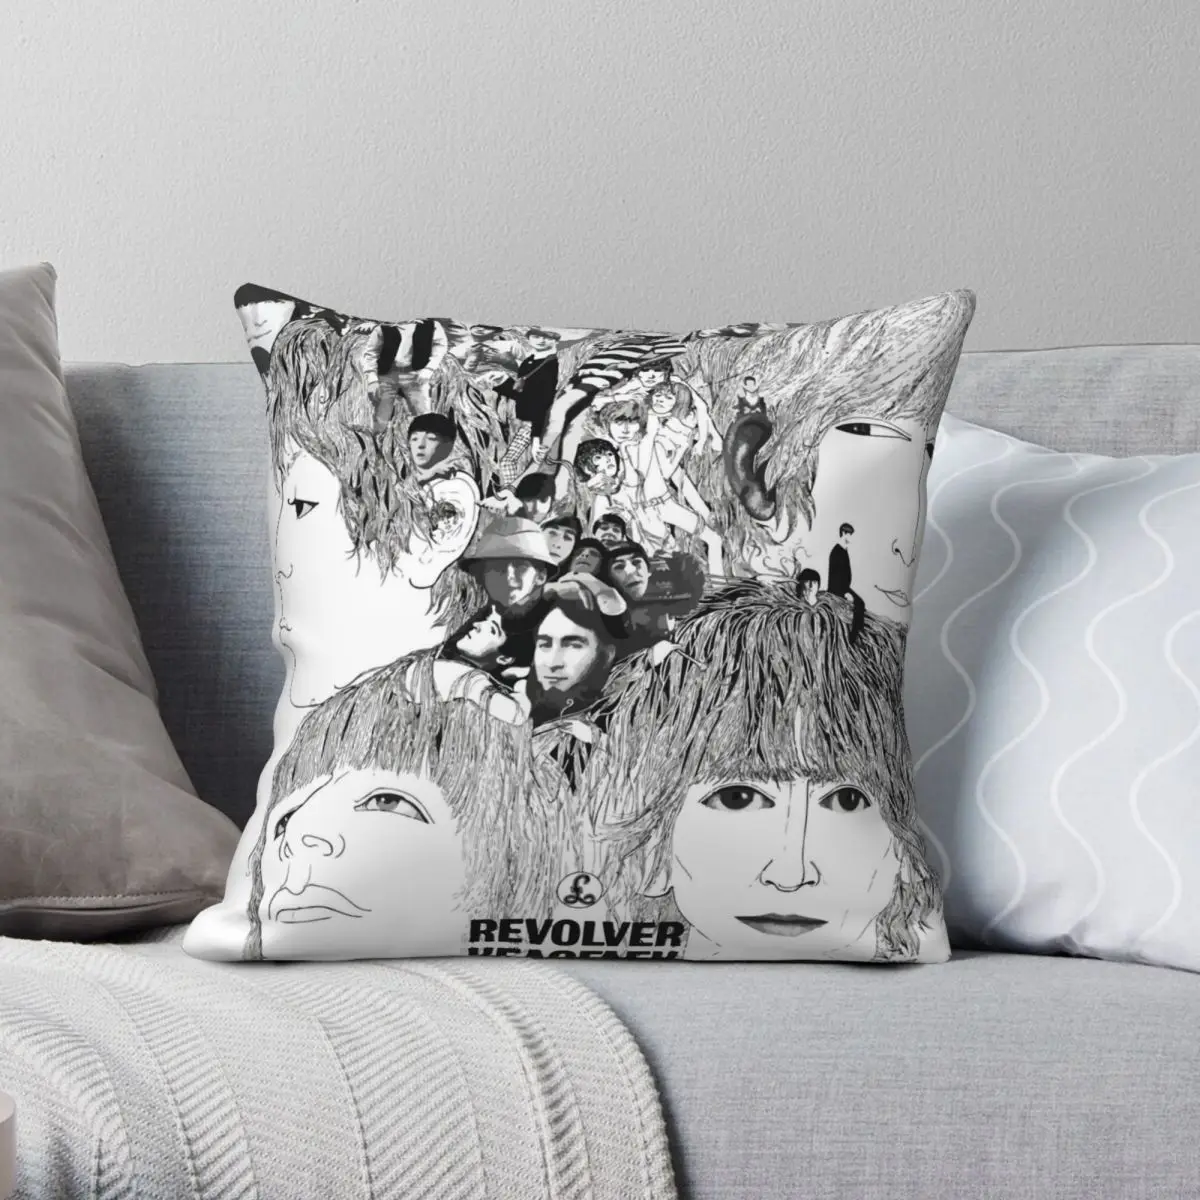 

Classic Revolver Album Cover Pillowcase Polyester Linen Velvet Printed Zip Decorative Pillow Case Bed Cushion Cover 18"